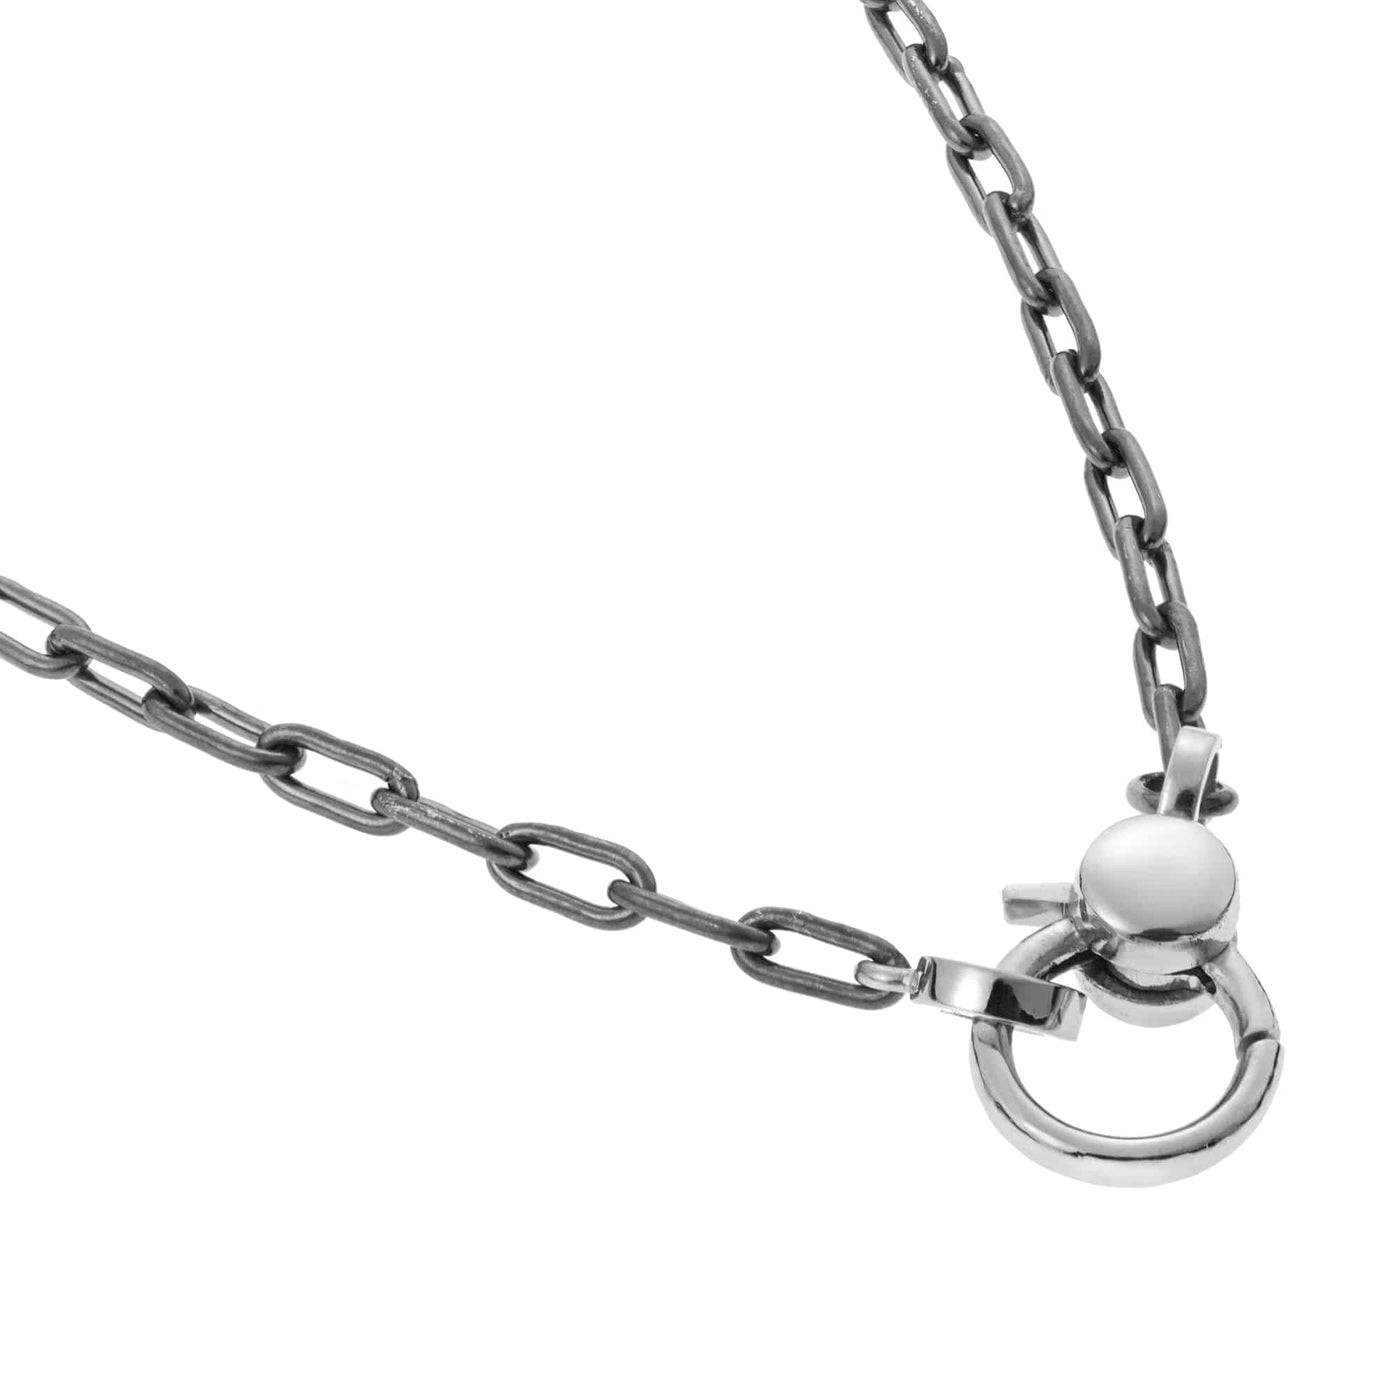 Narrow oblong chain with small gold lock SLV-W14 - Chains - Ileana Makri store